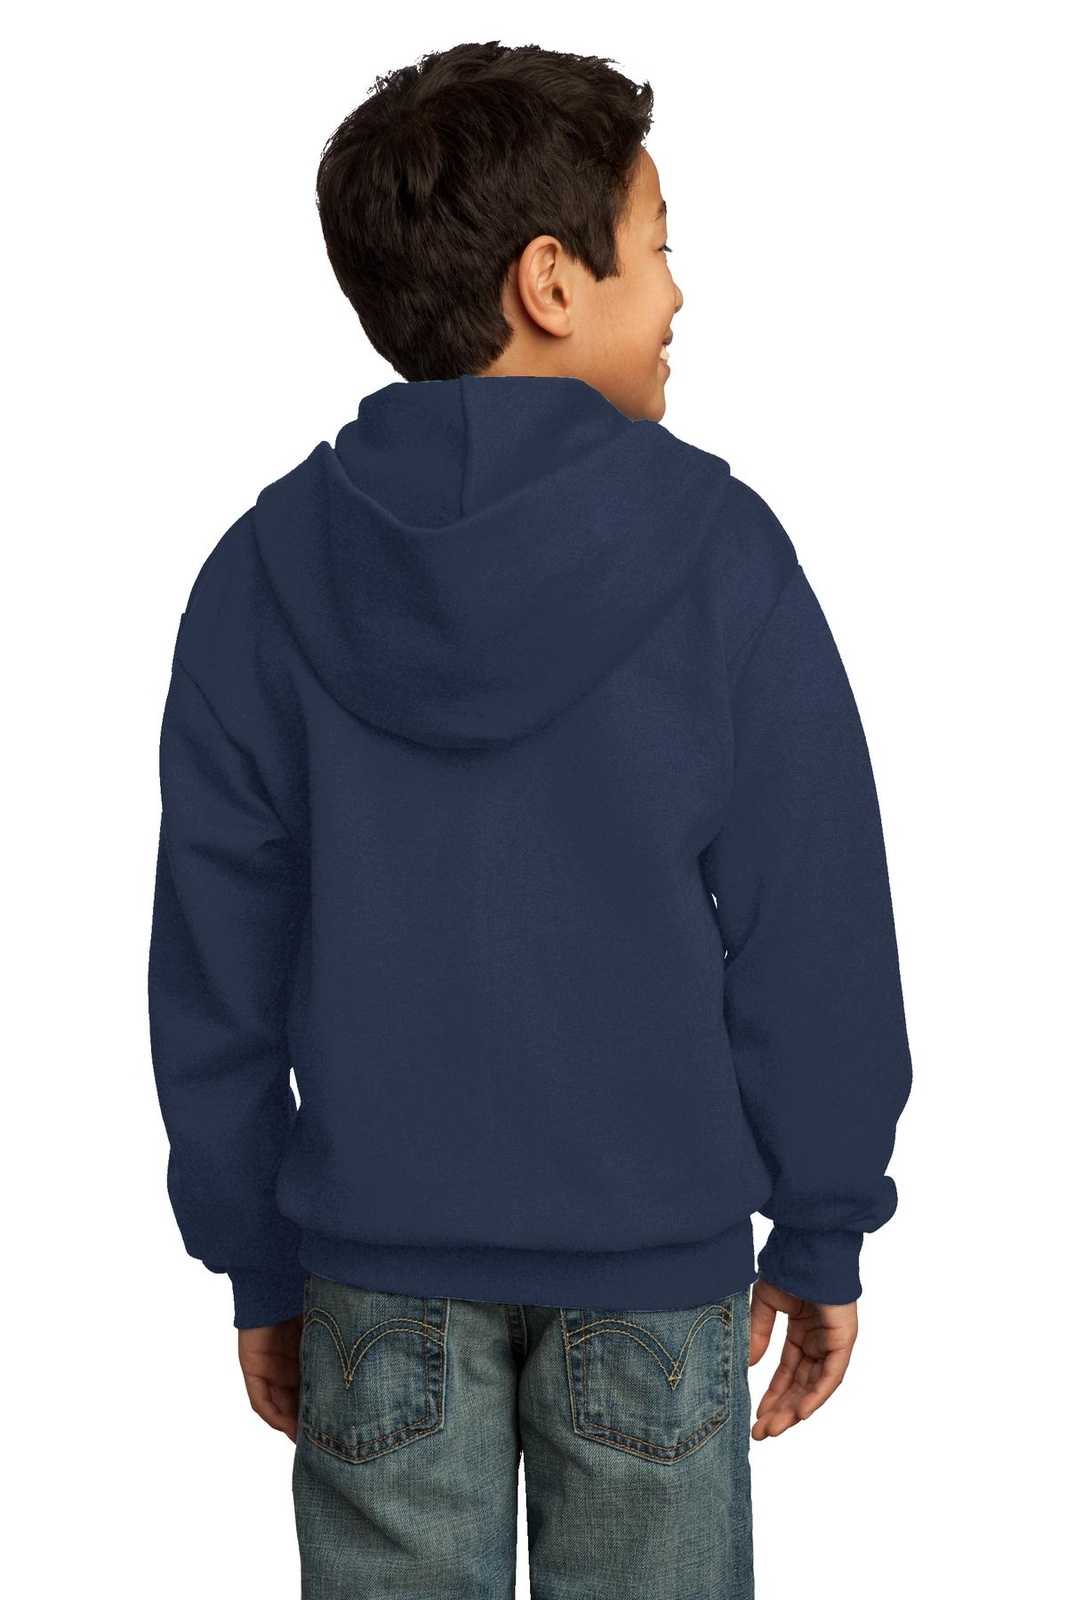 Port & Company PC90YZH Youth Core Fleece Full-Zip Hooded Sweatshirt - Navy - HIT a Double - 1